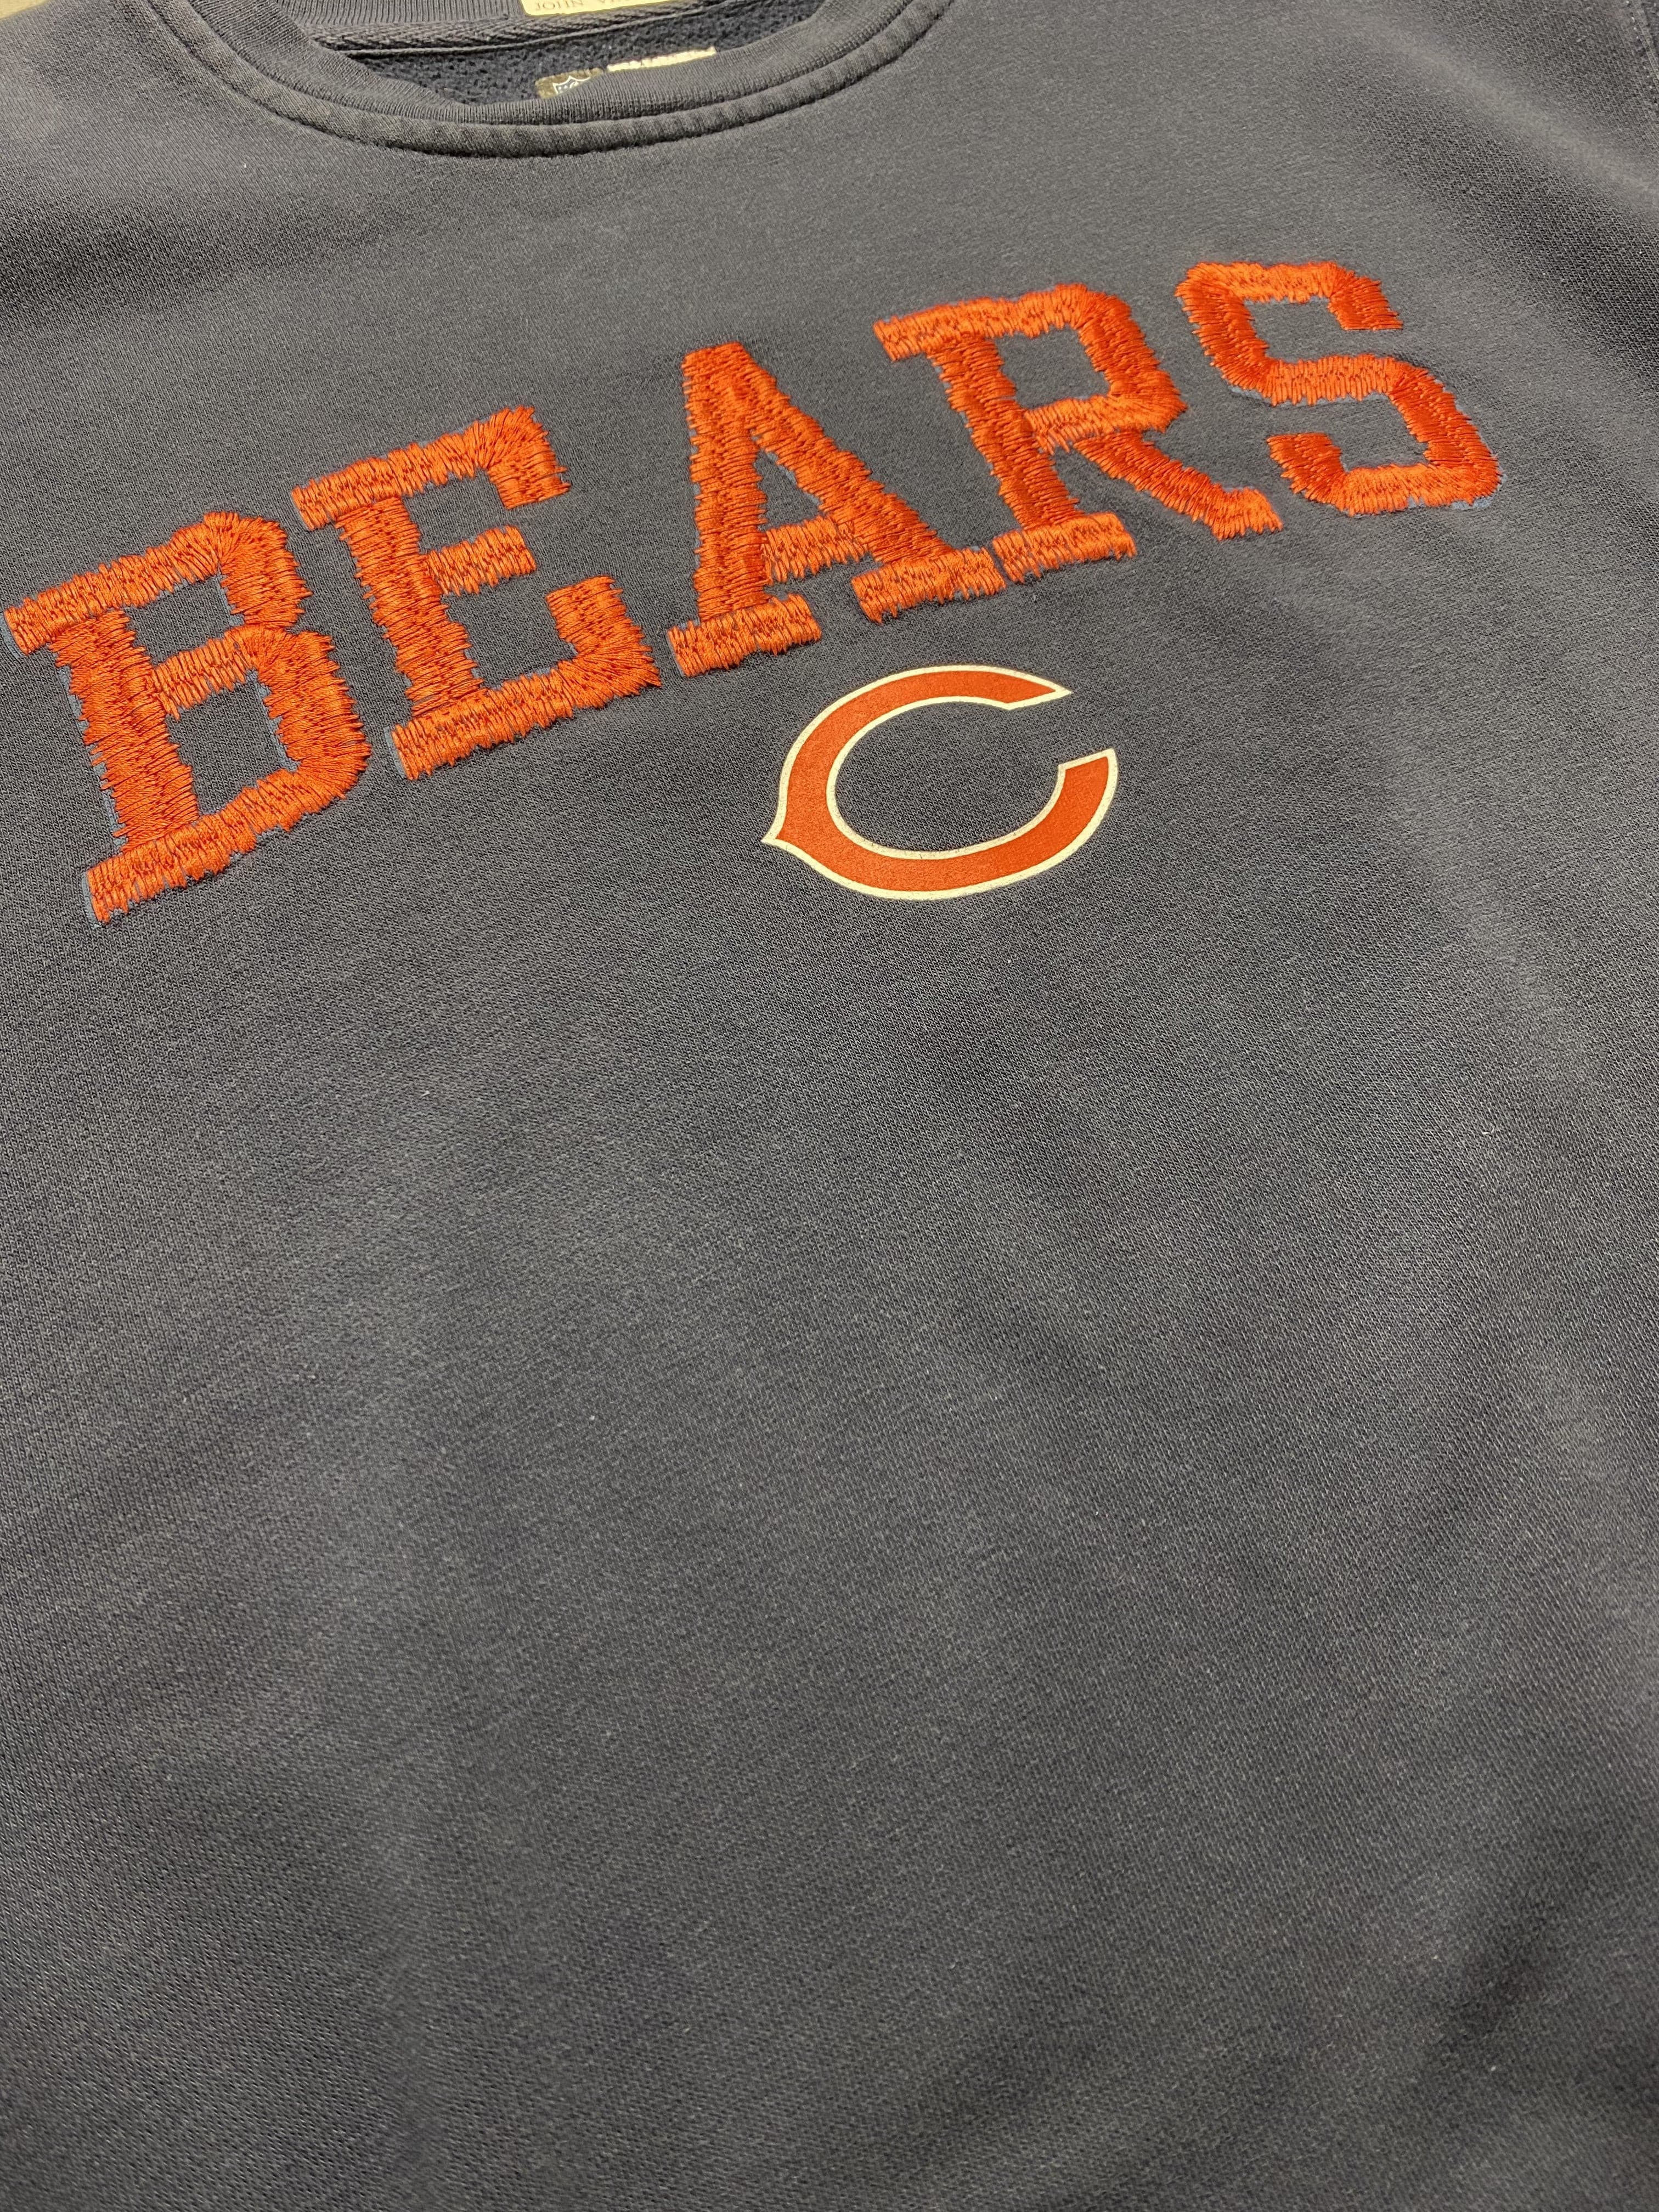 NFL Chicago Bears Logo Sweatshirt Navy // Large - RHAGHOUSE VINTAGE